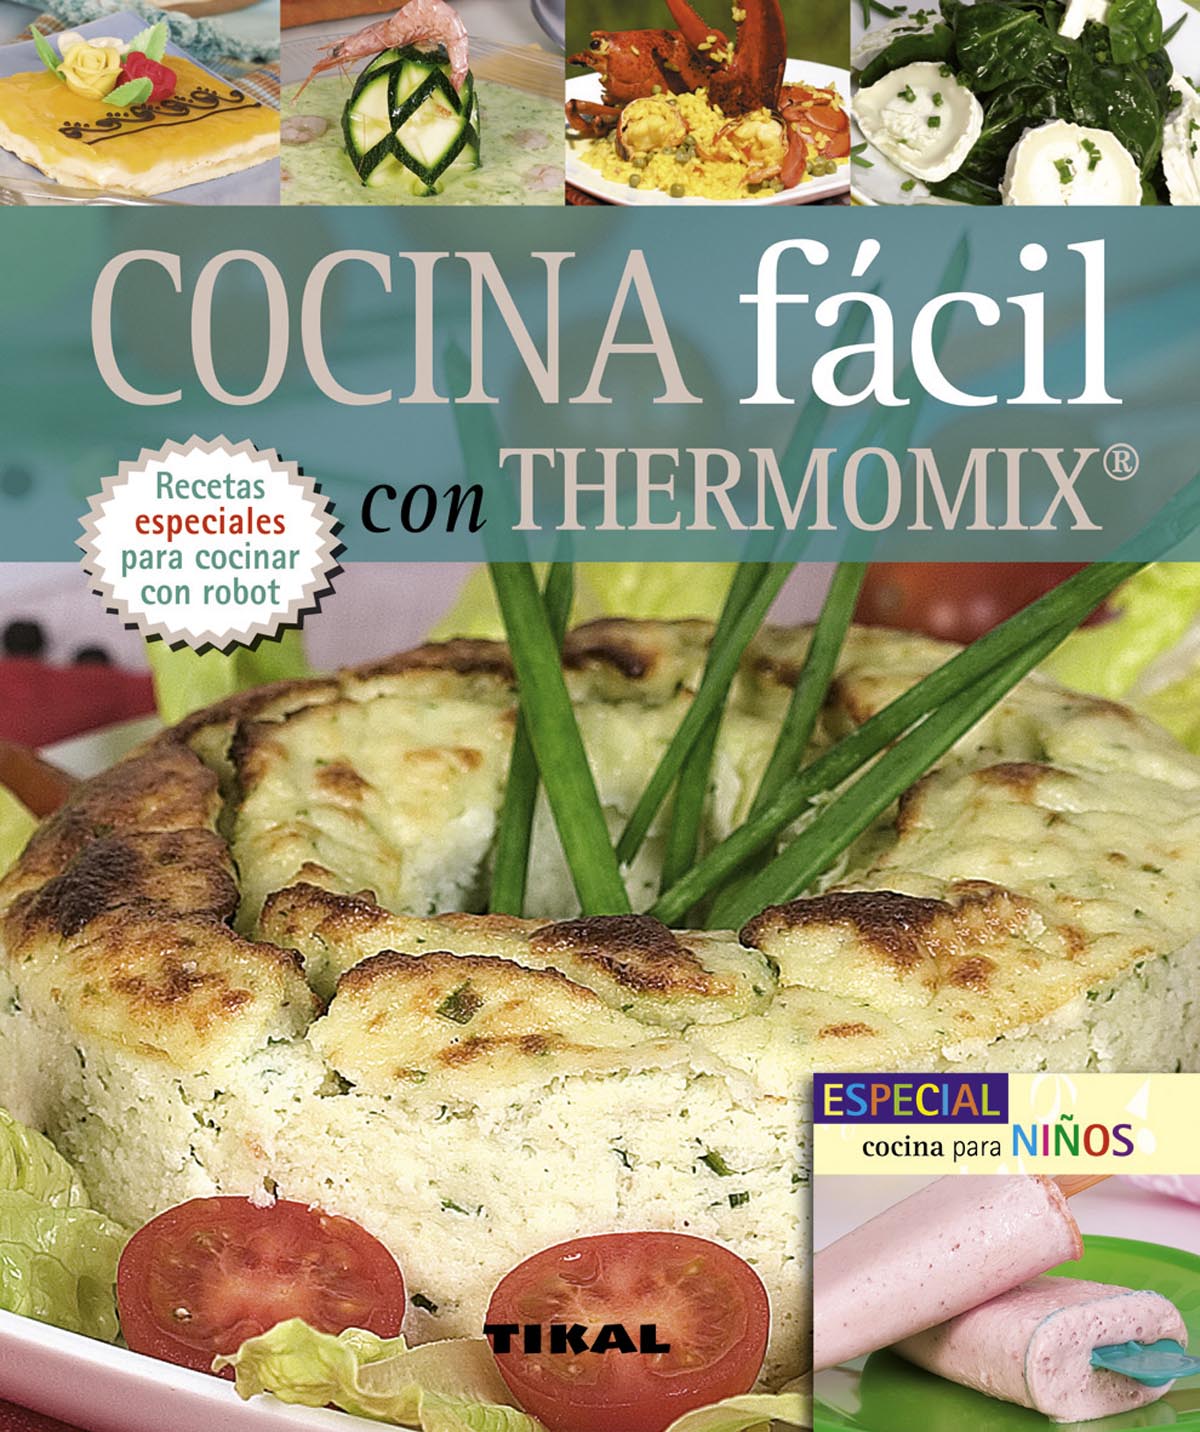 Cocina fcil con thermomix. Incluye especial cocina para nios